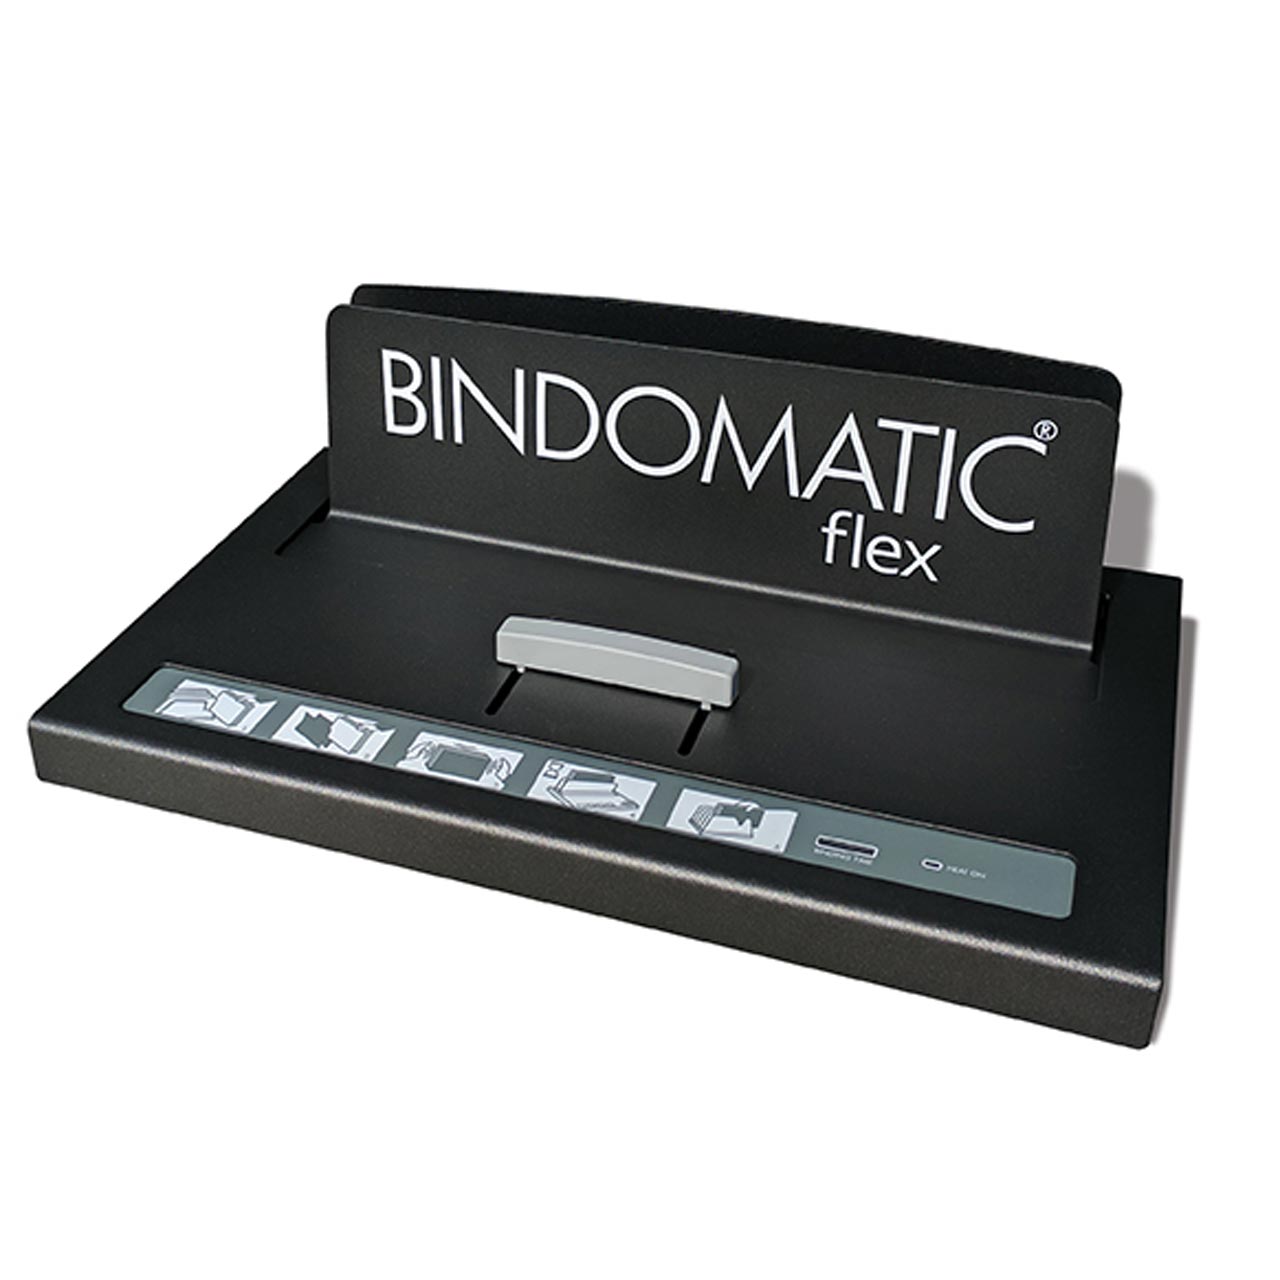 bindomatic accelflex 1280